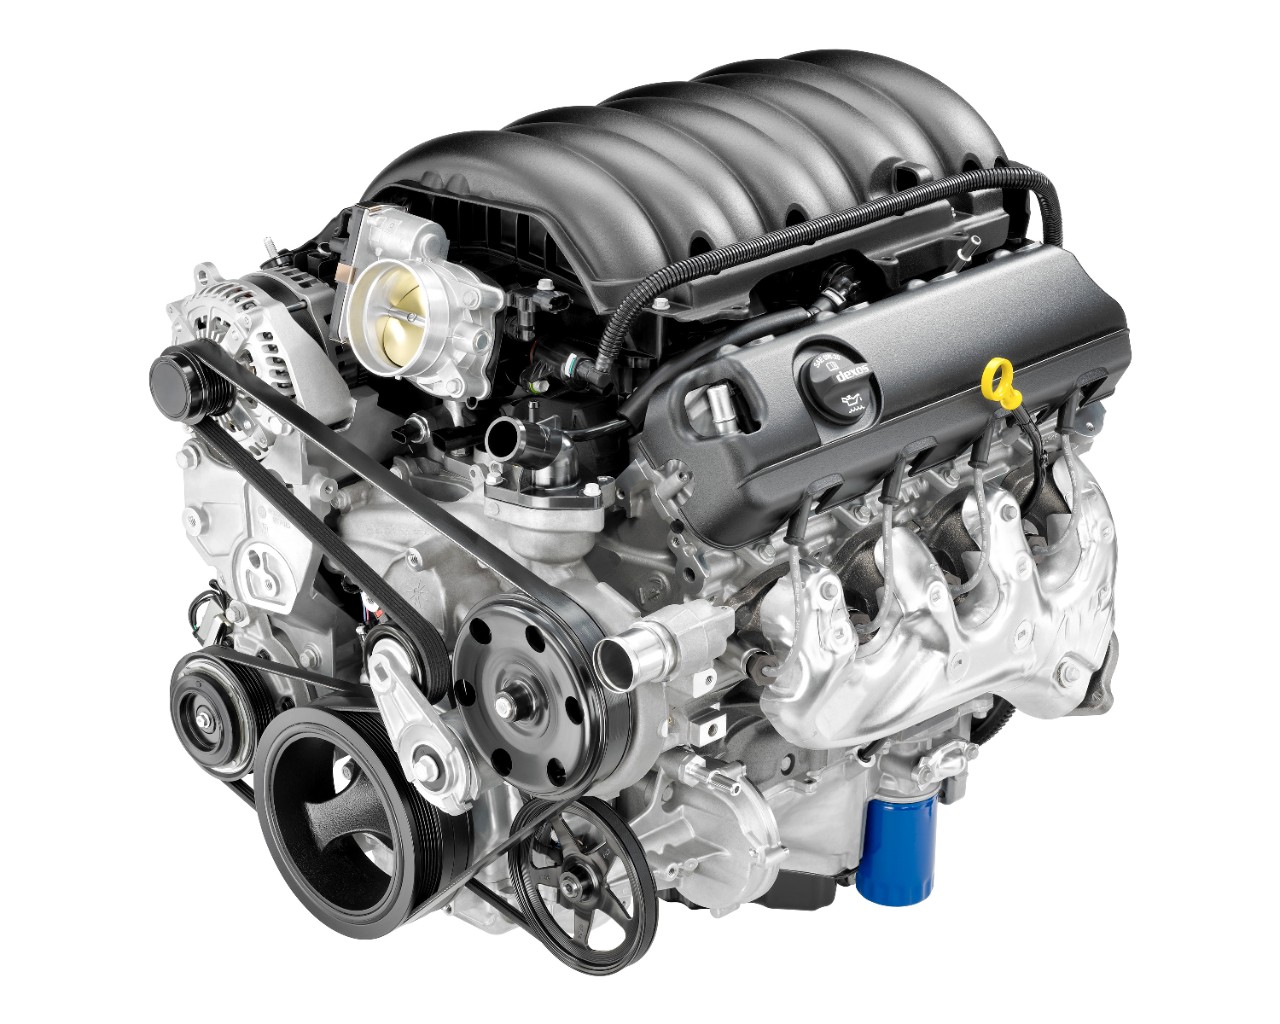 2015 chevrolet silverado 1500 engine 5.3 l v8